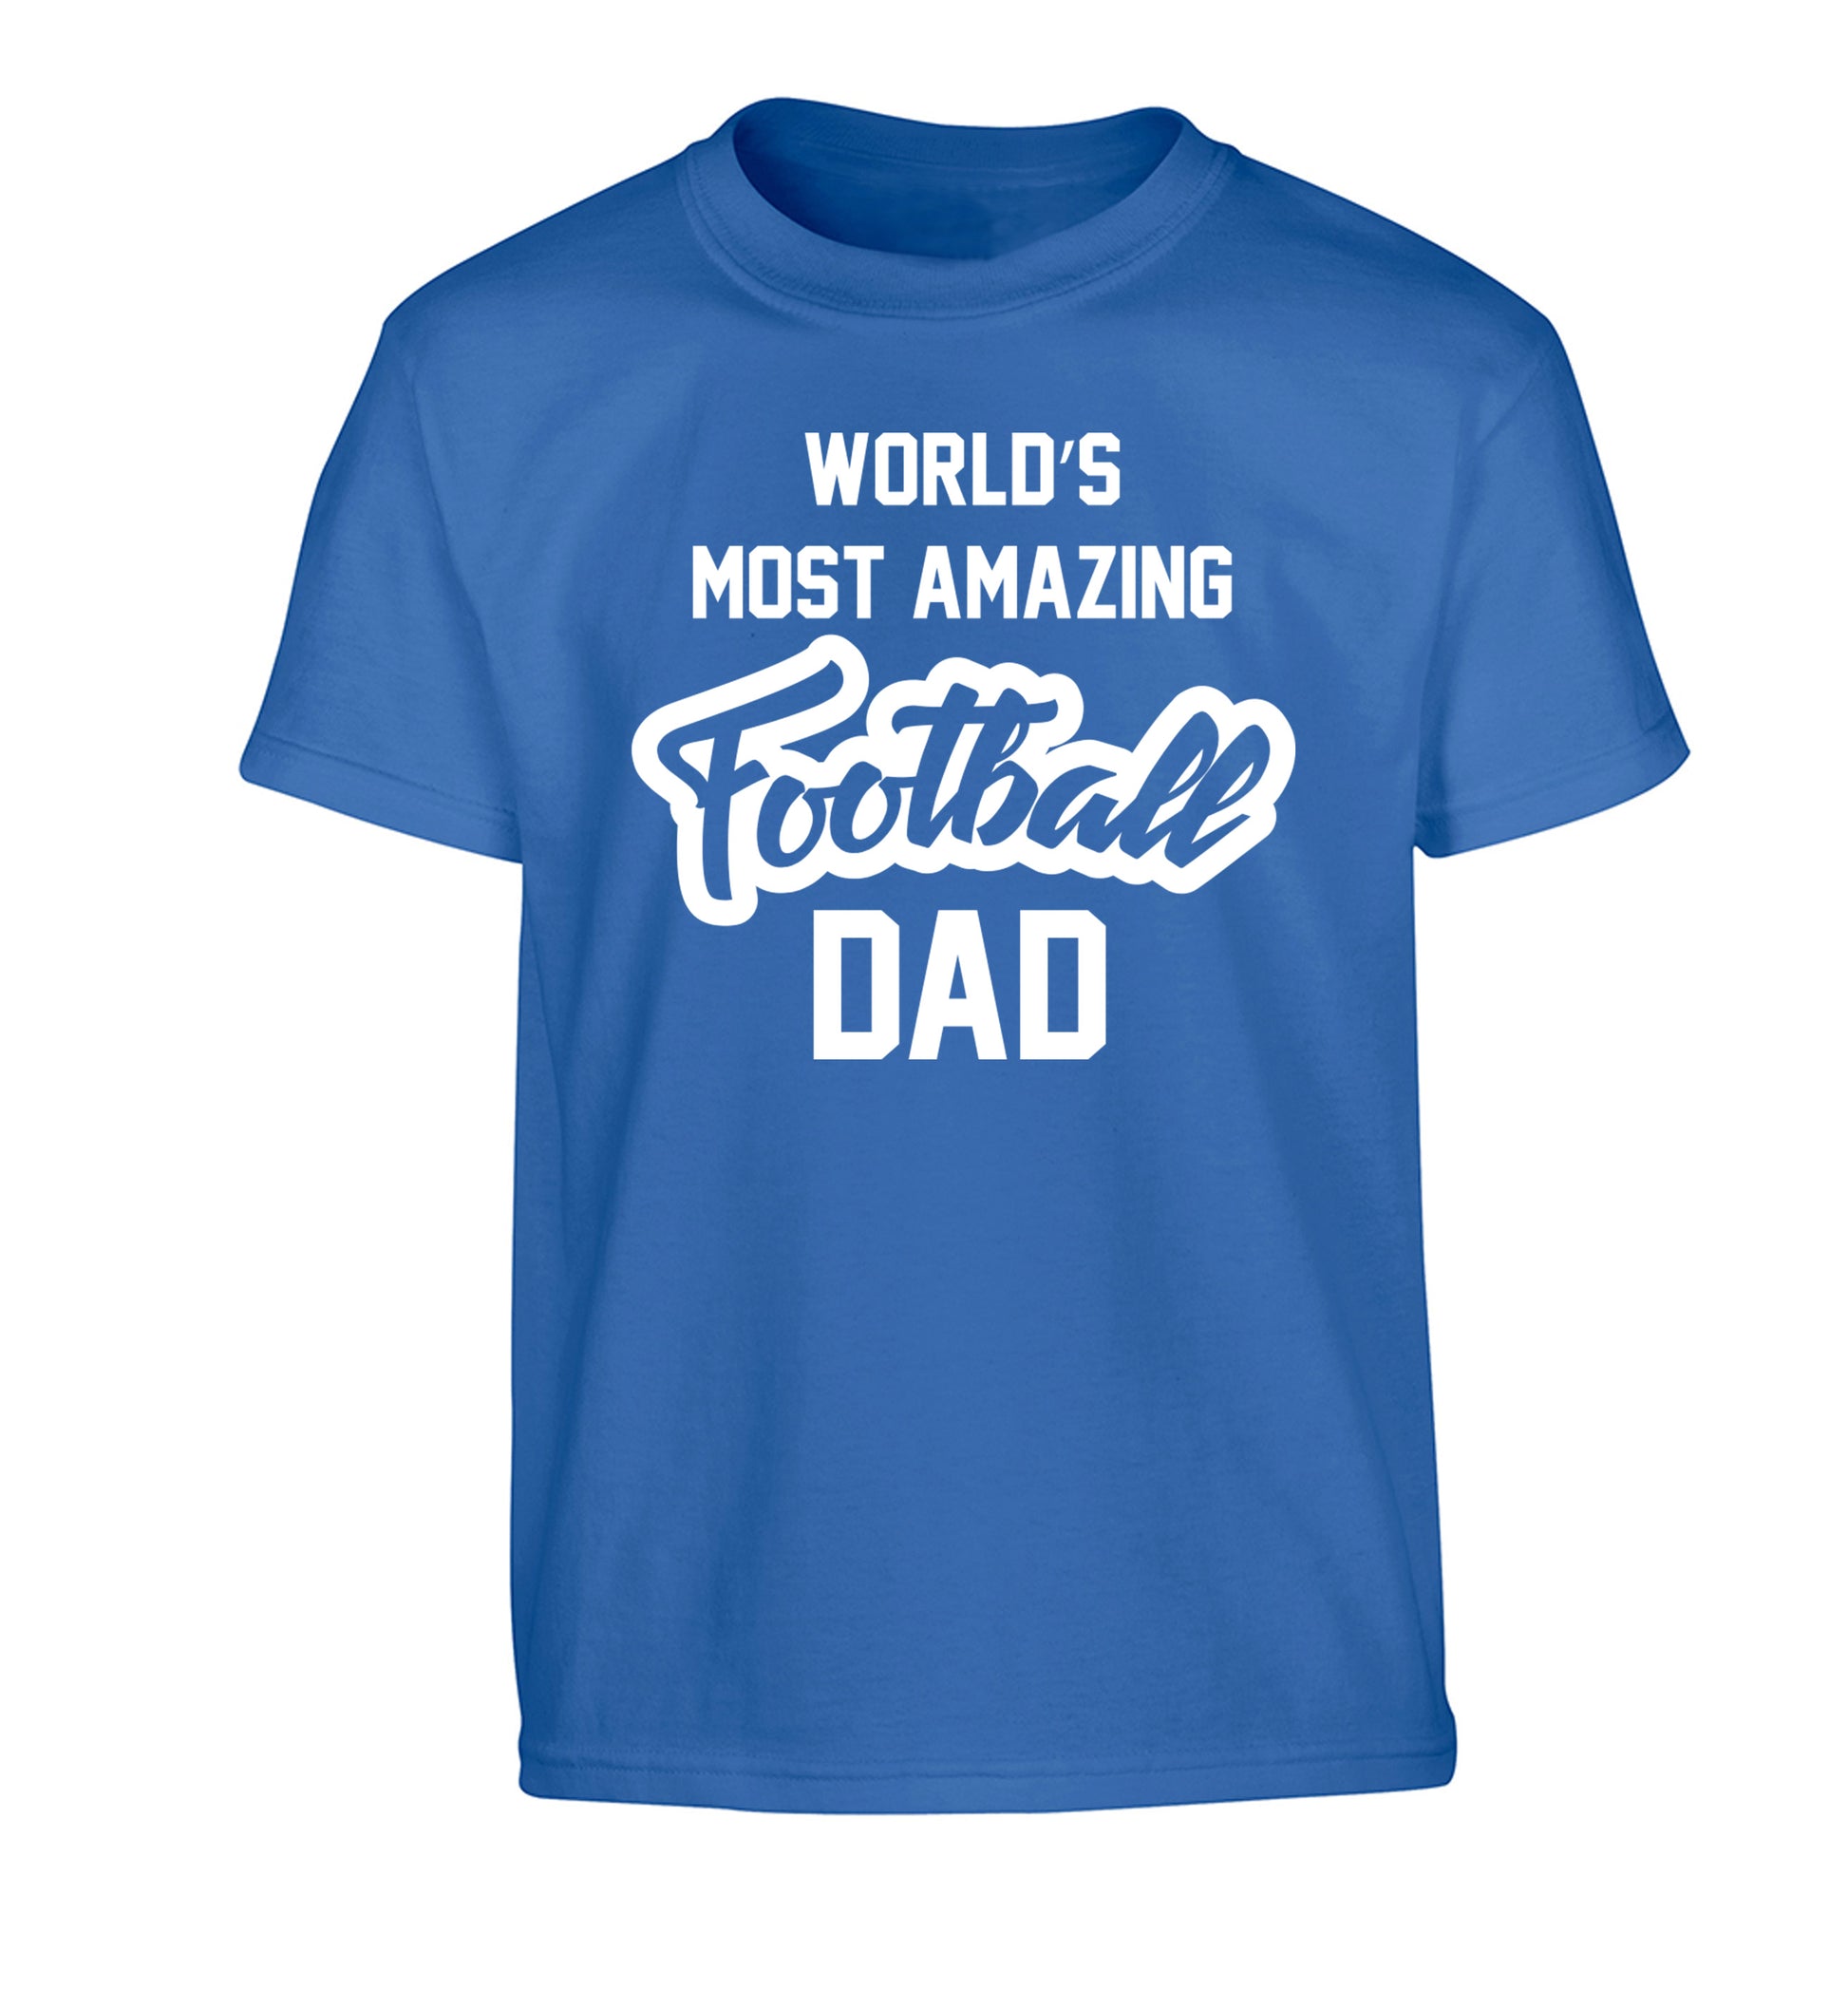 Worlds most amazing football dad Children's blue Tshirt 12-14 Years